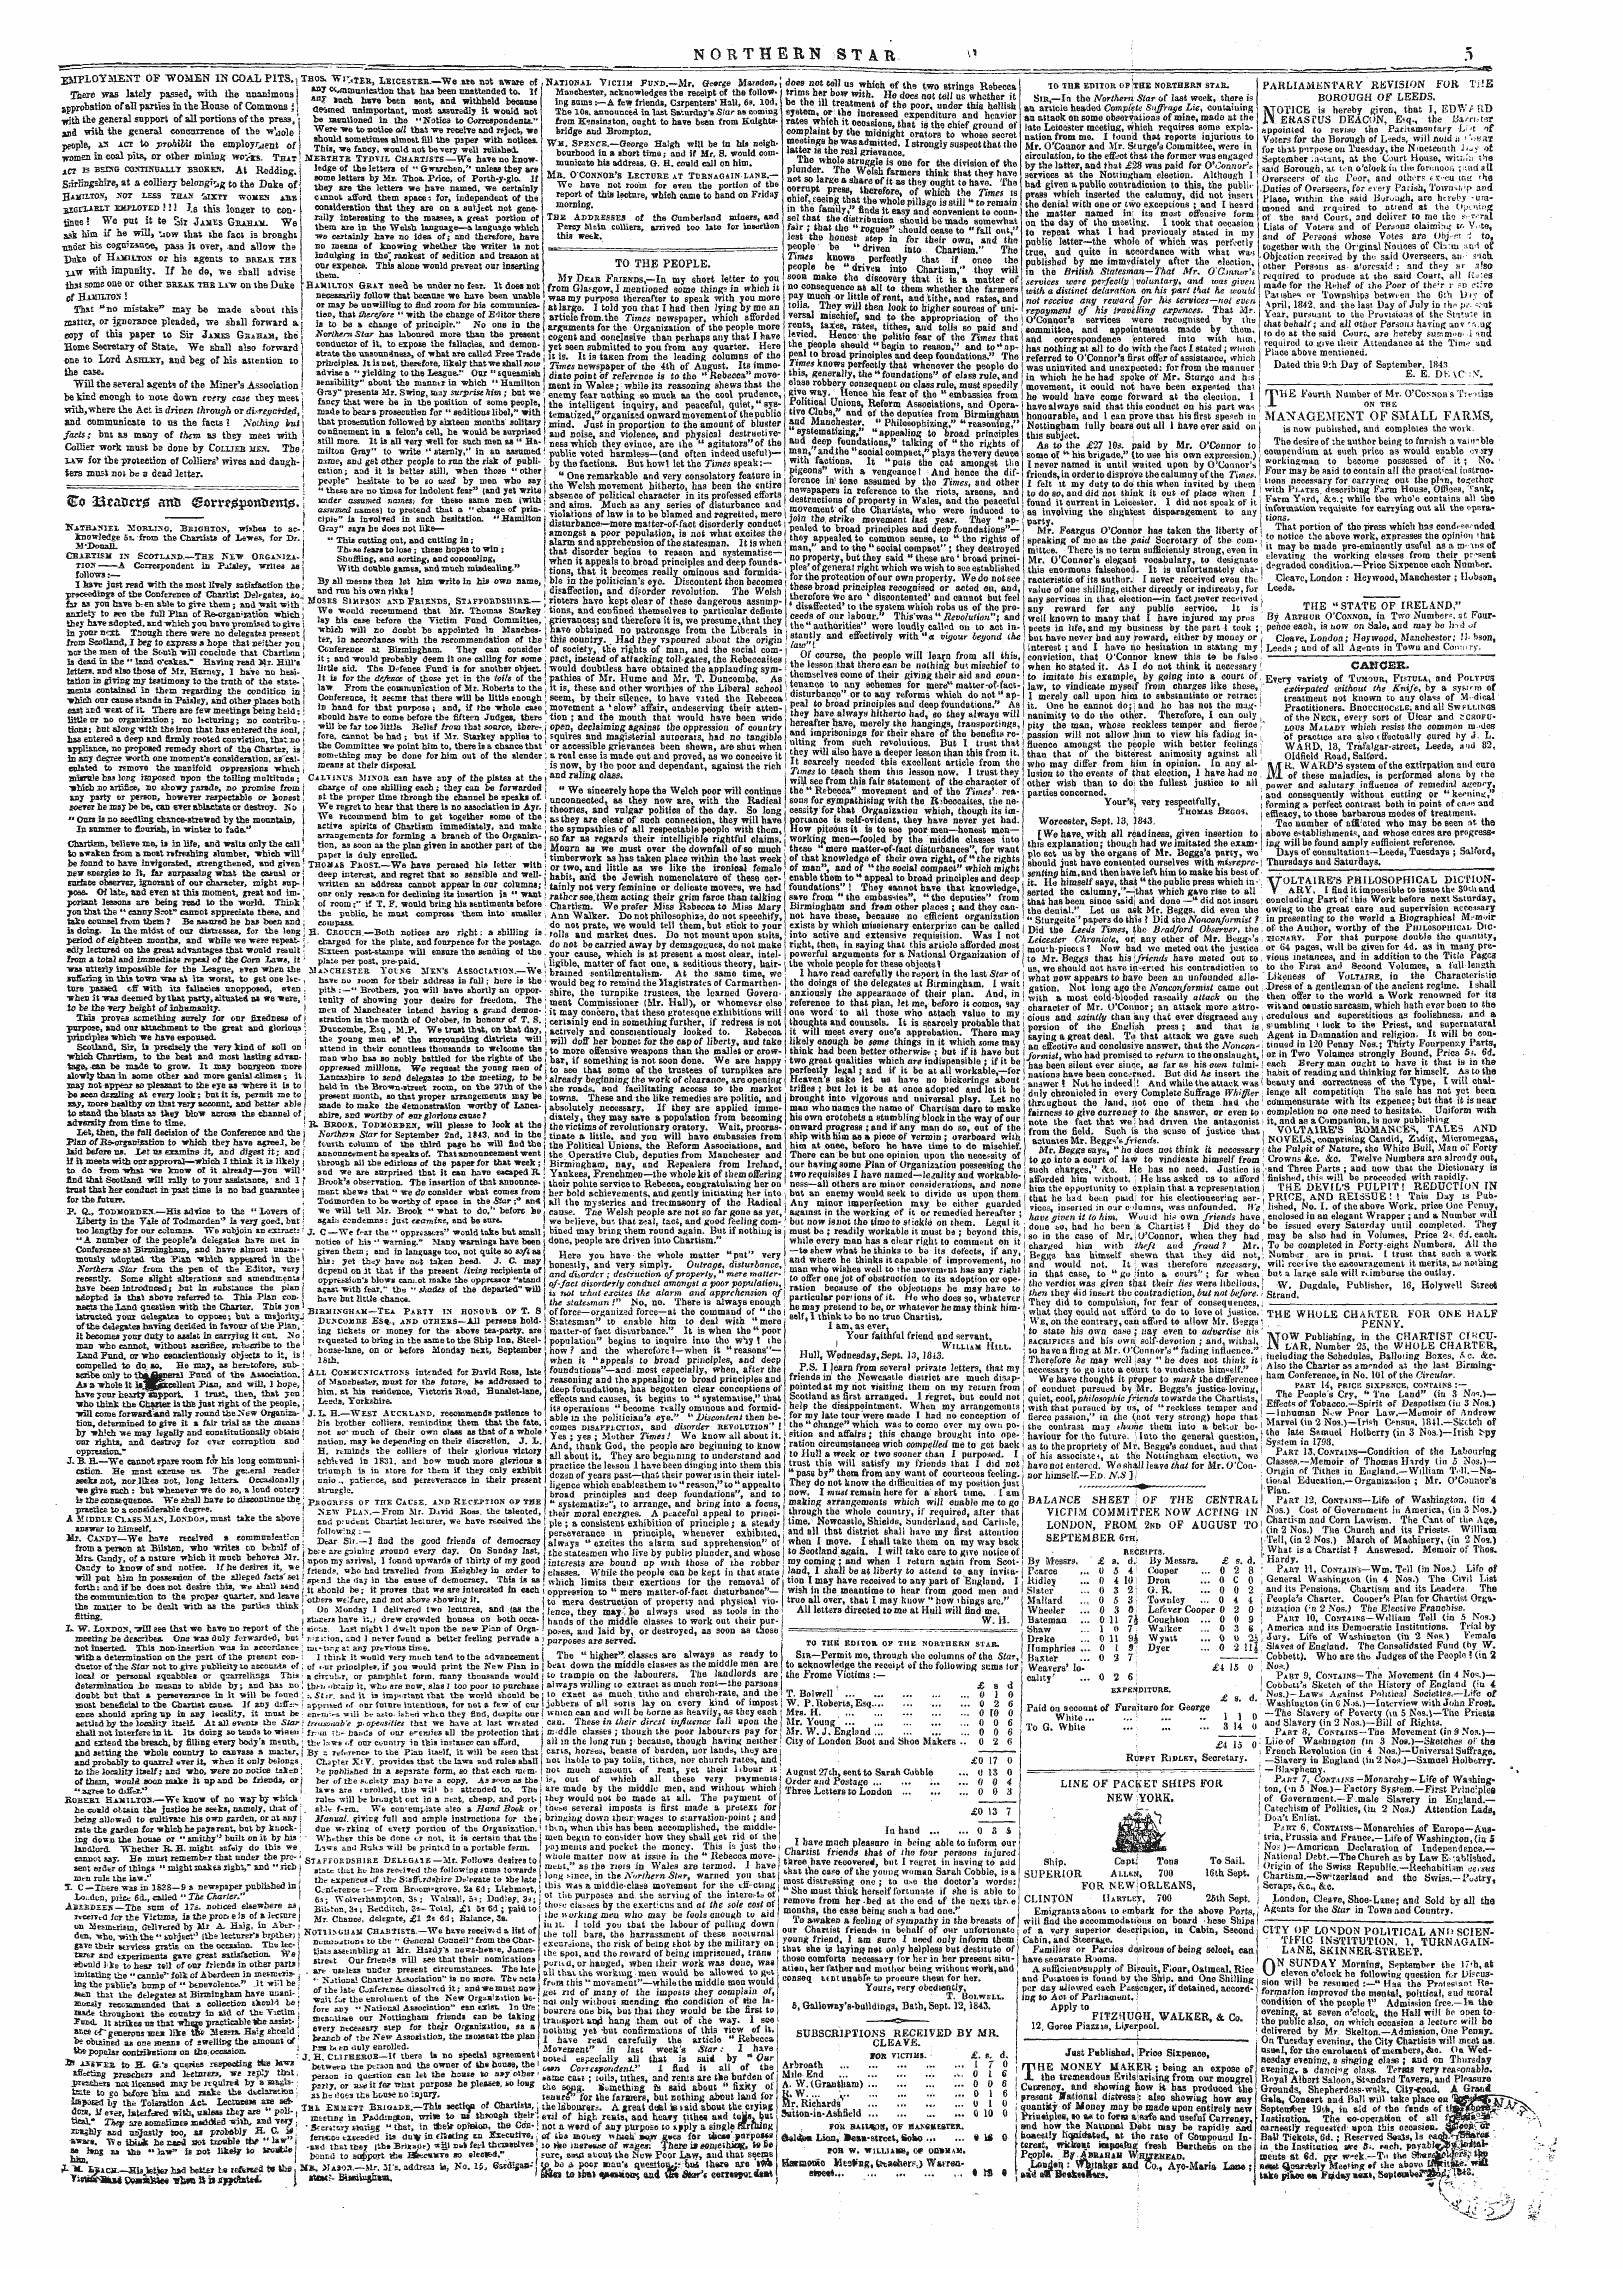 Northern Star (1837-1852): jS F Y, 3rd edition - Sto 3$T&Lt;&Zv$ An& A?Orr*Gponti*Tti0.